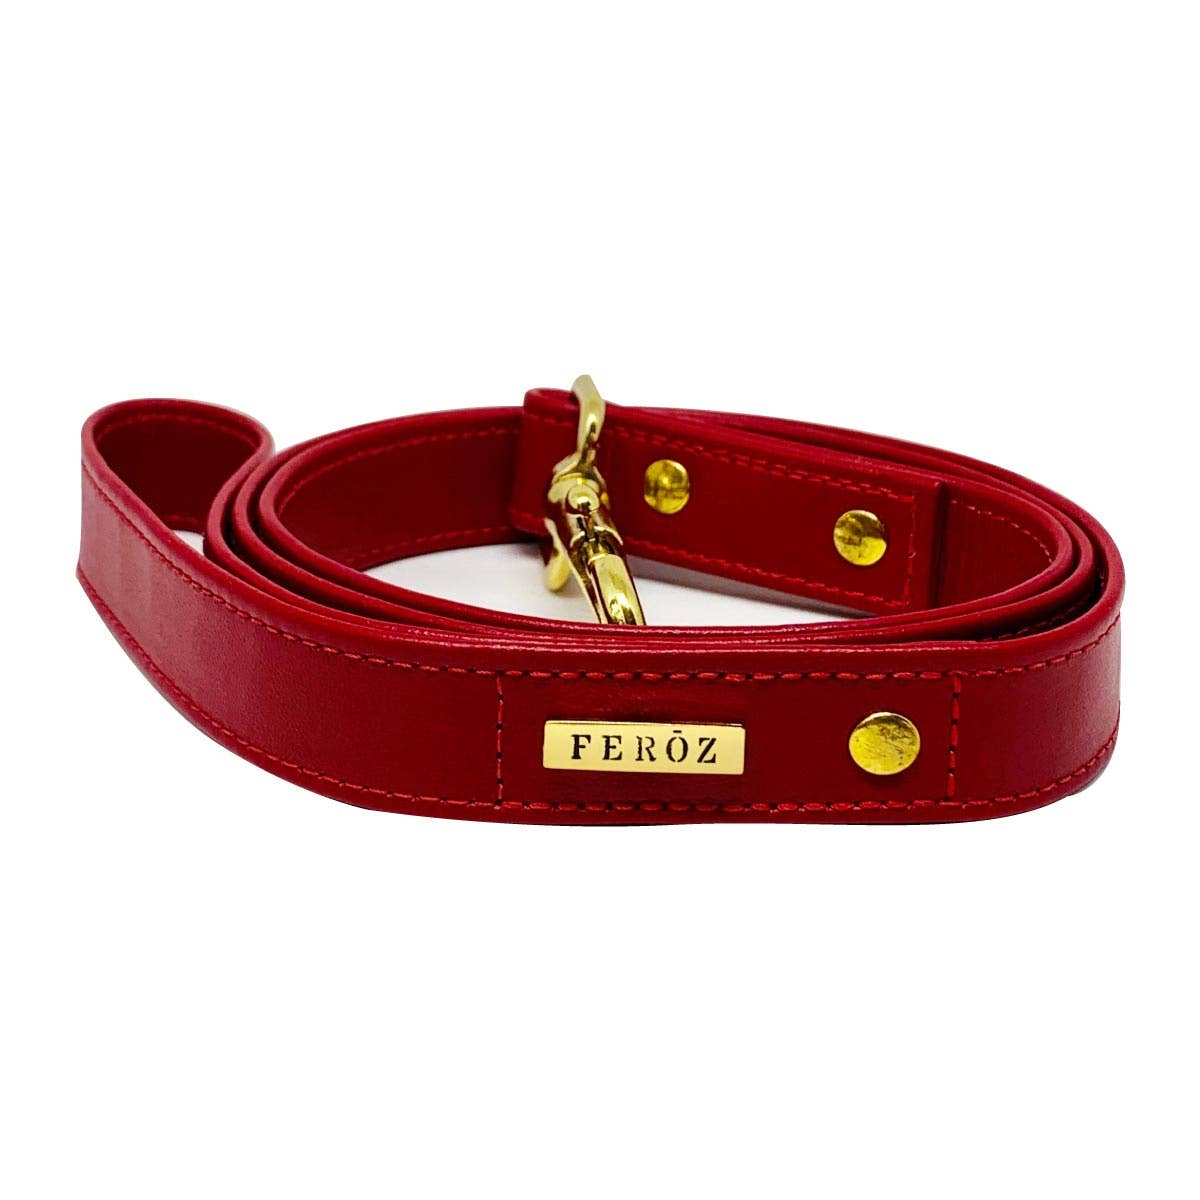 Feroz Scarlet Red Leather Leash